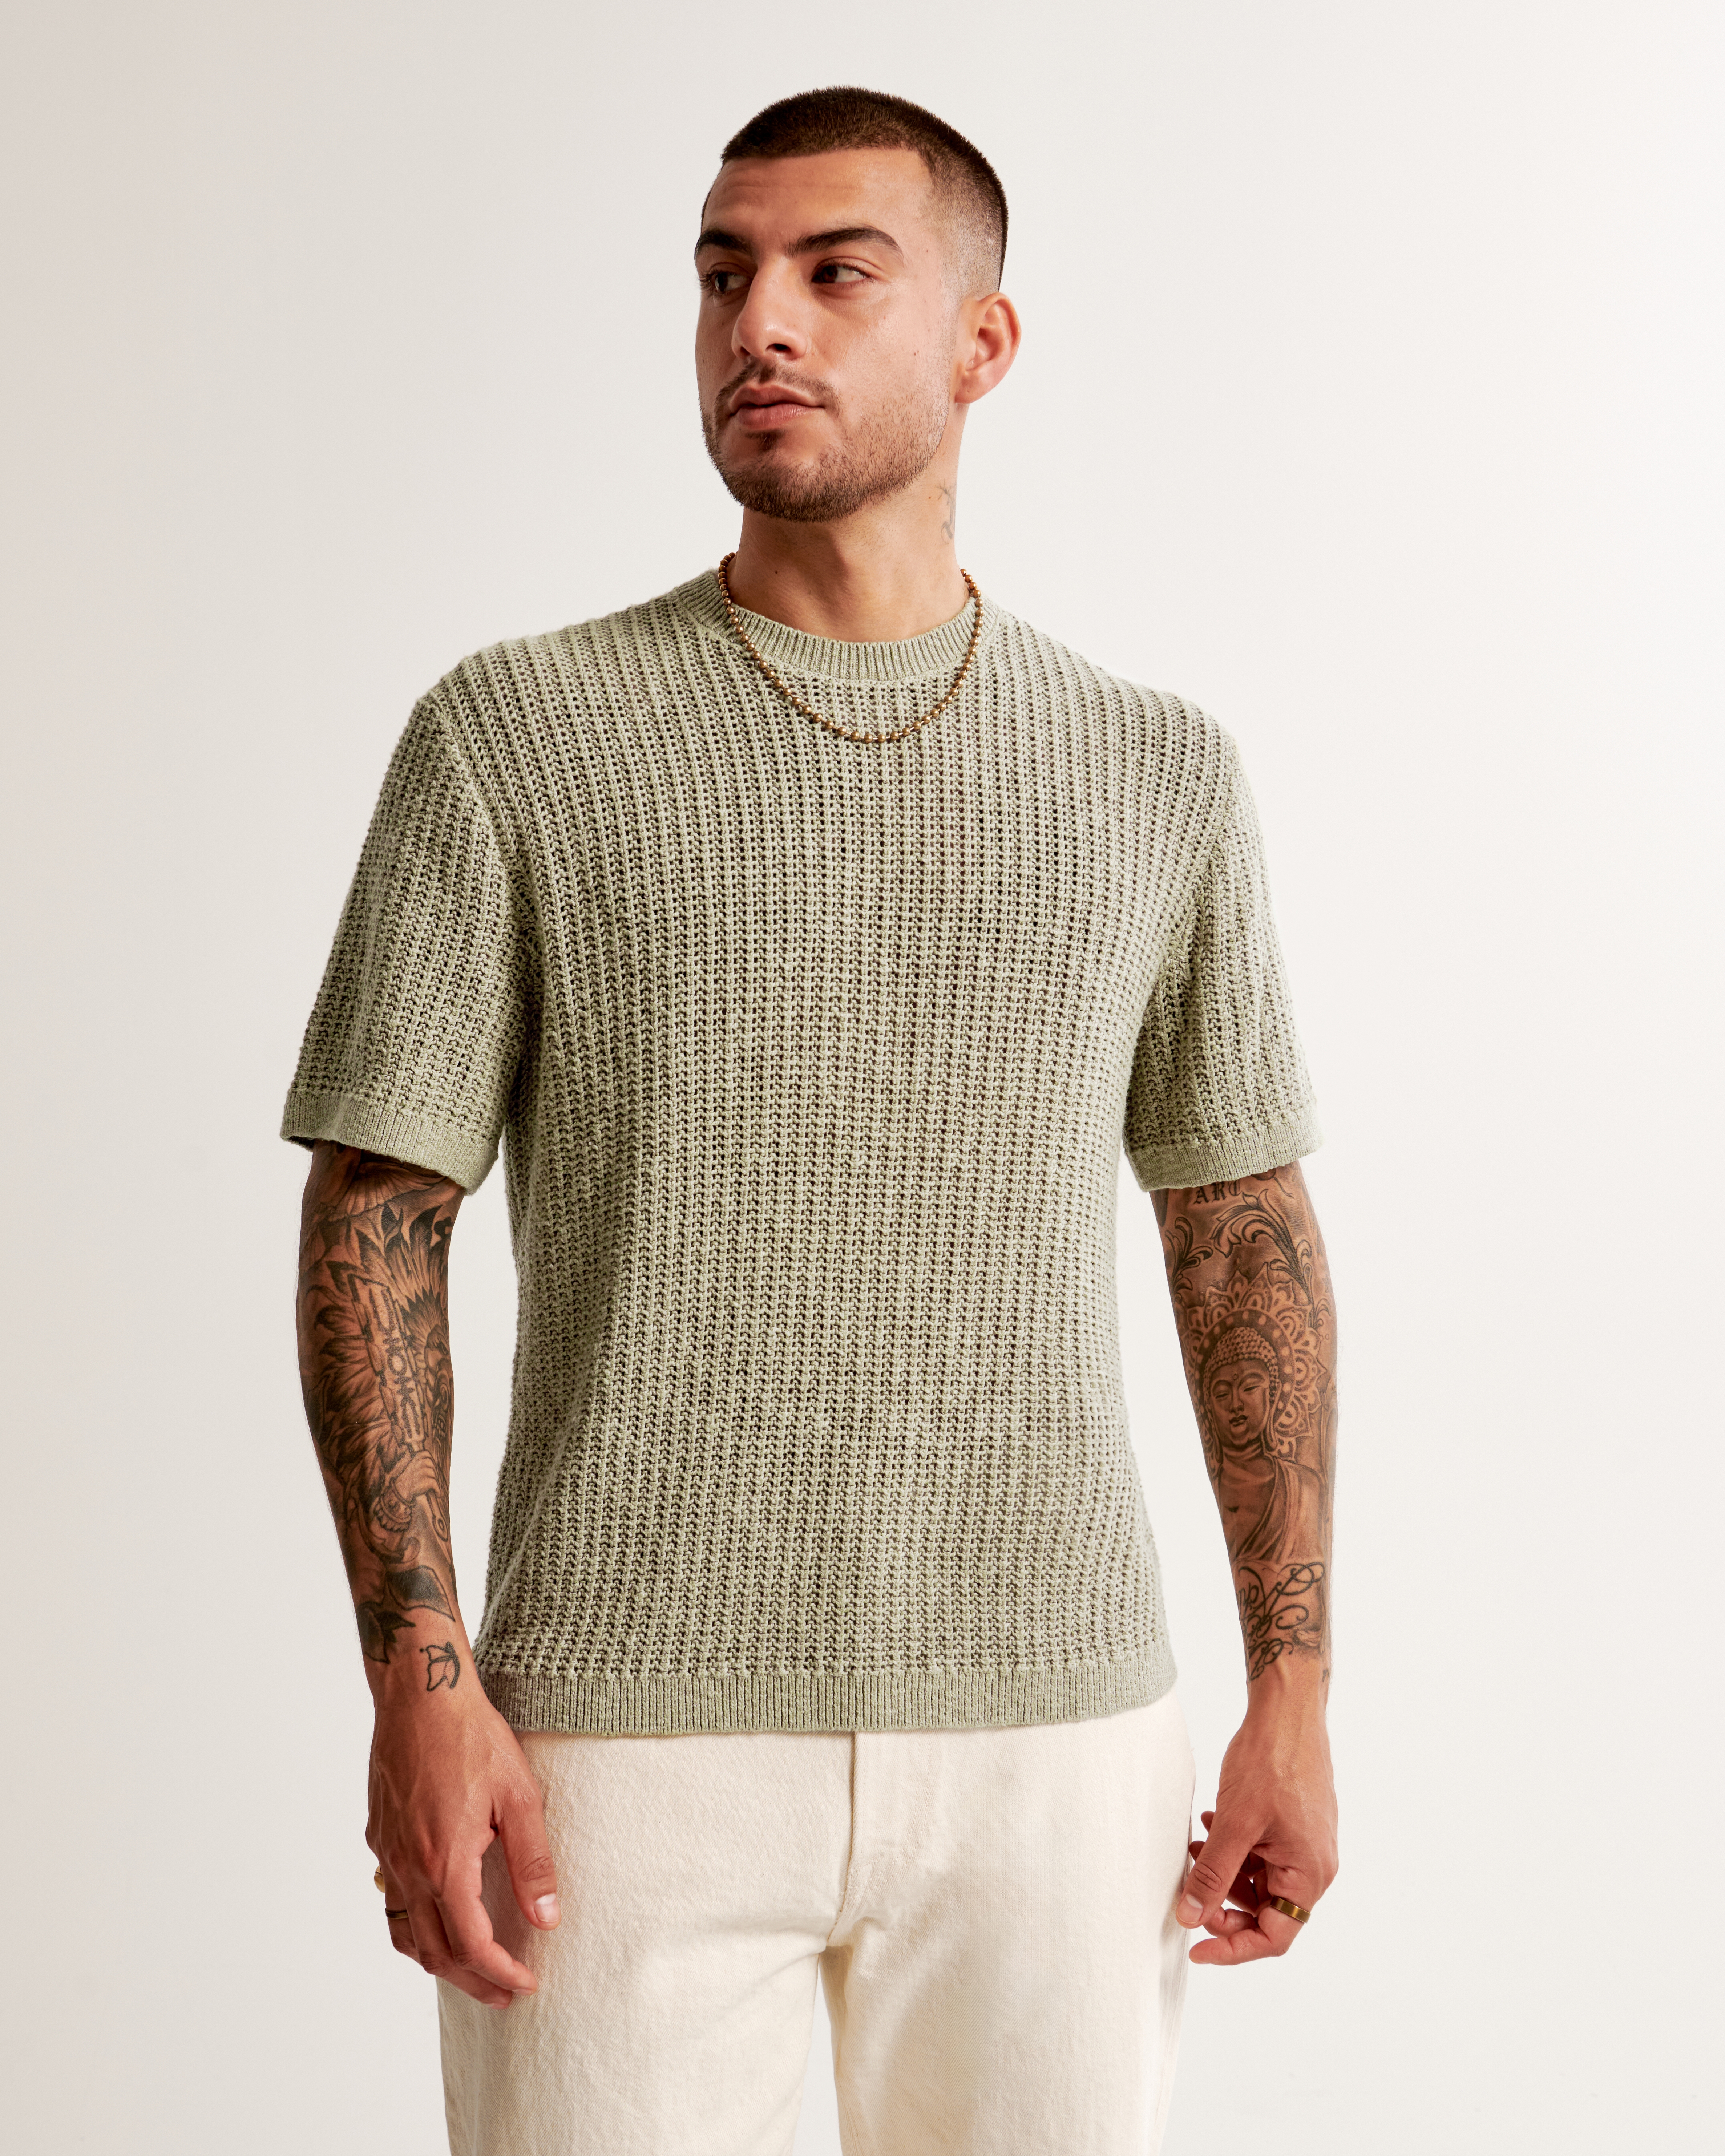 Men's Stitched Sweater Tee | Men's Tops | Abercrombie.com